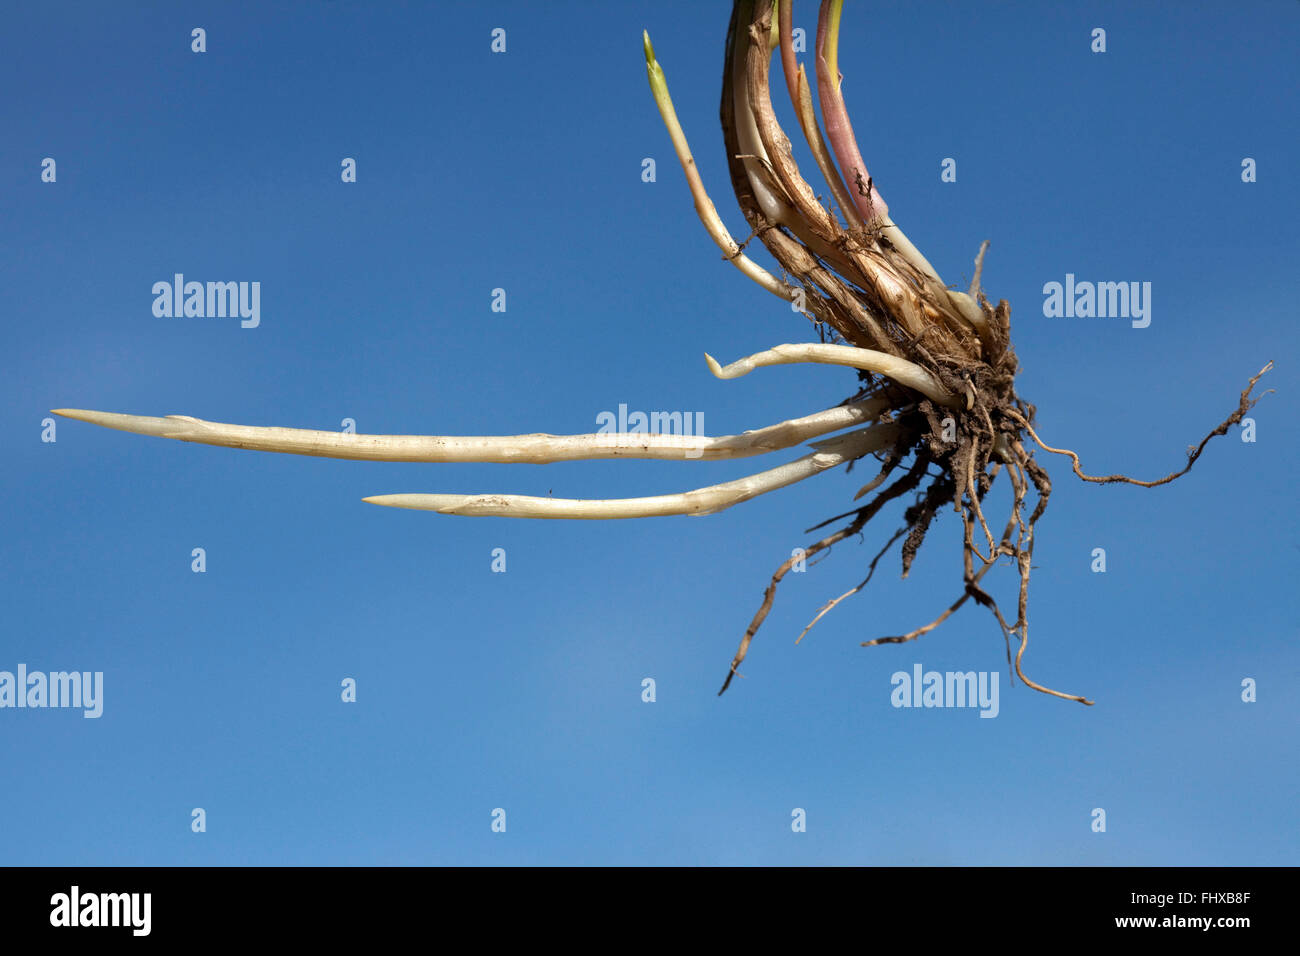 Couchgrass rhizome Stock Photo